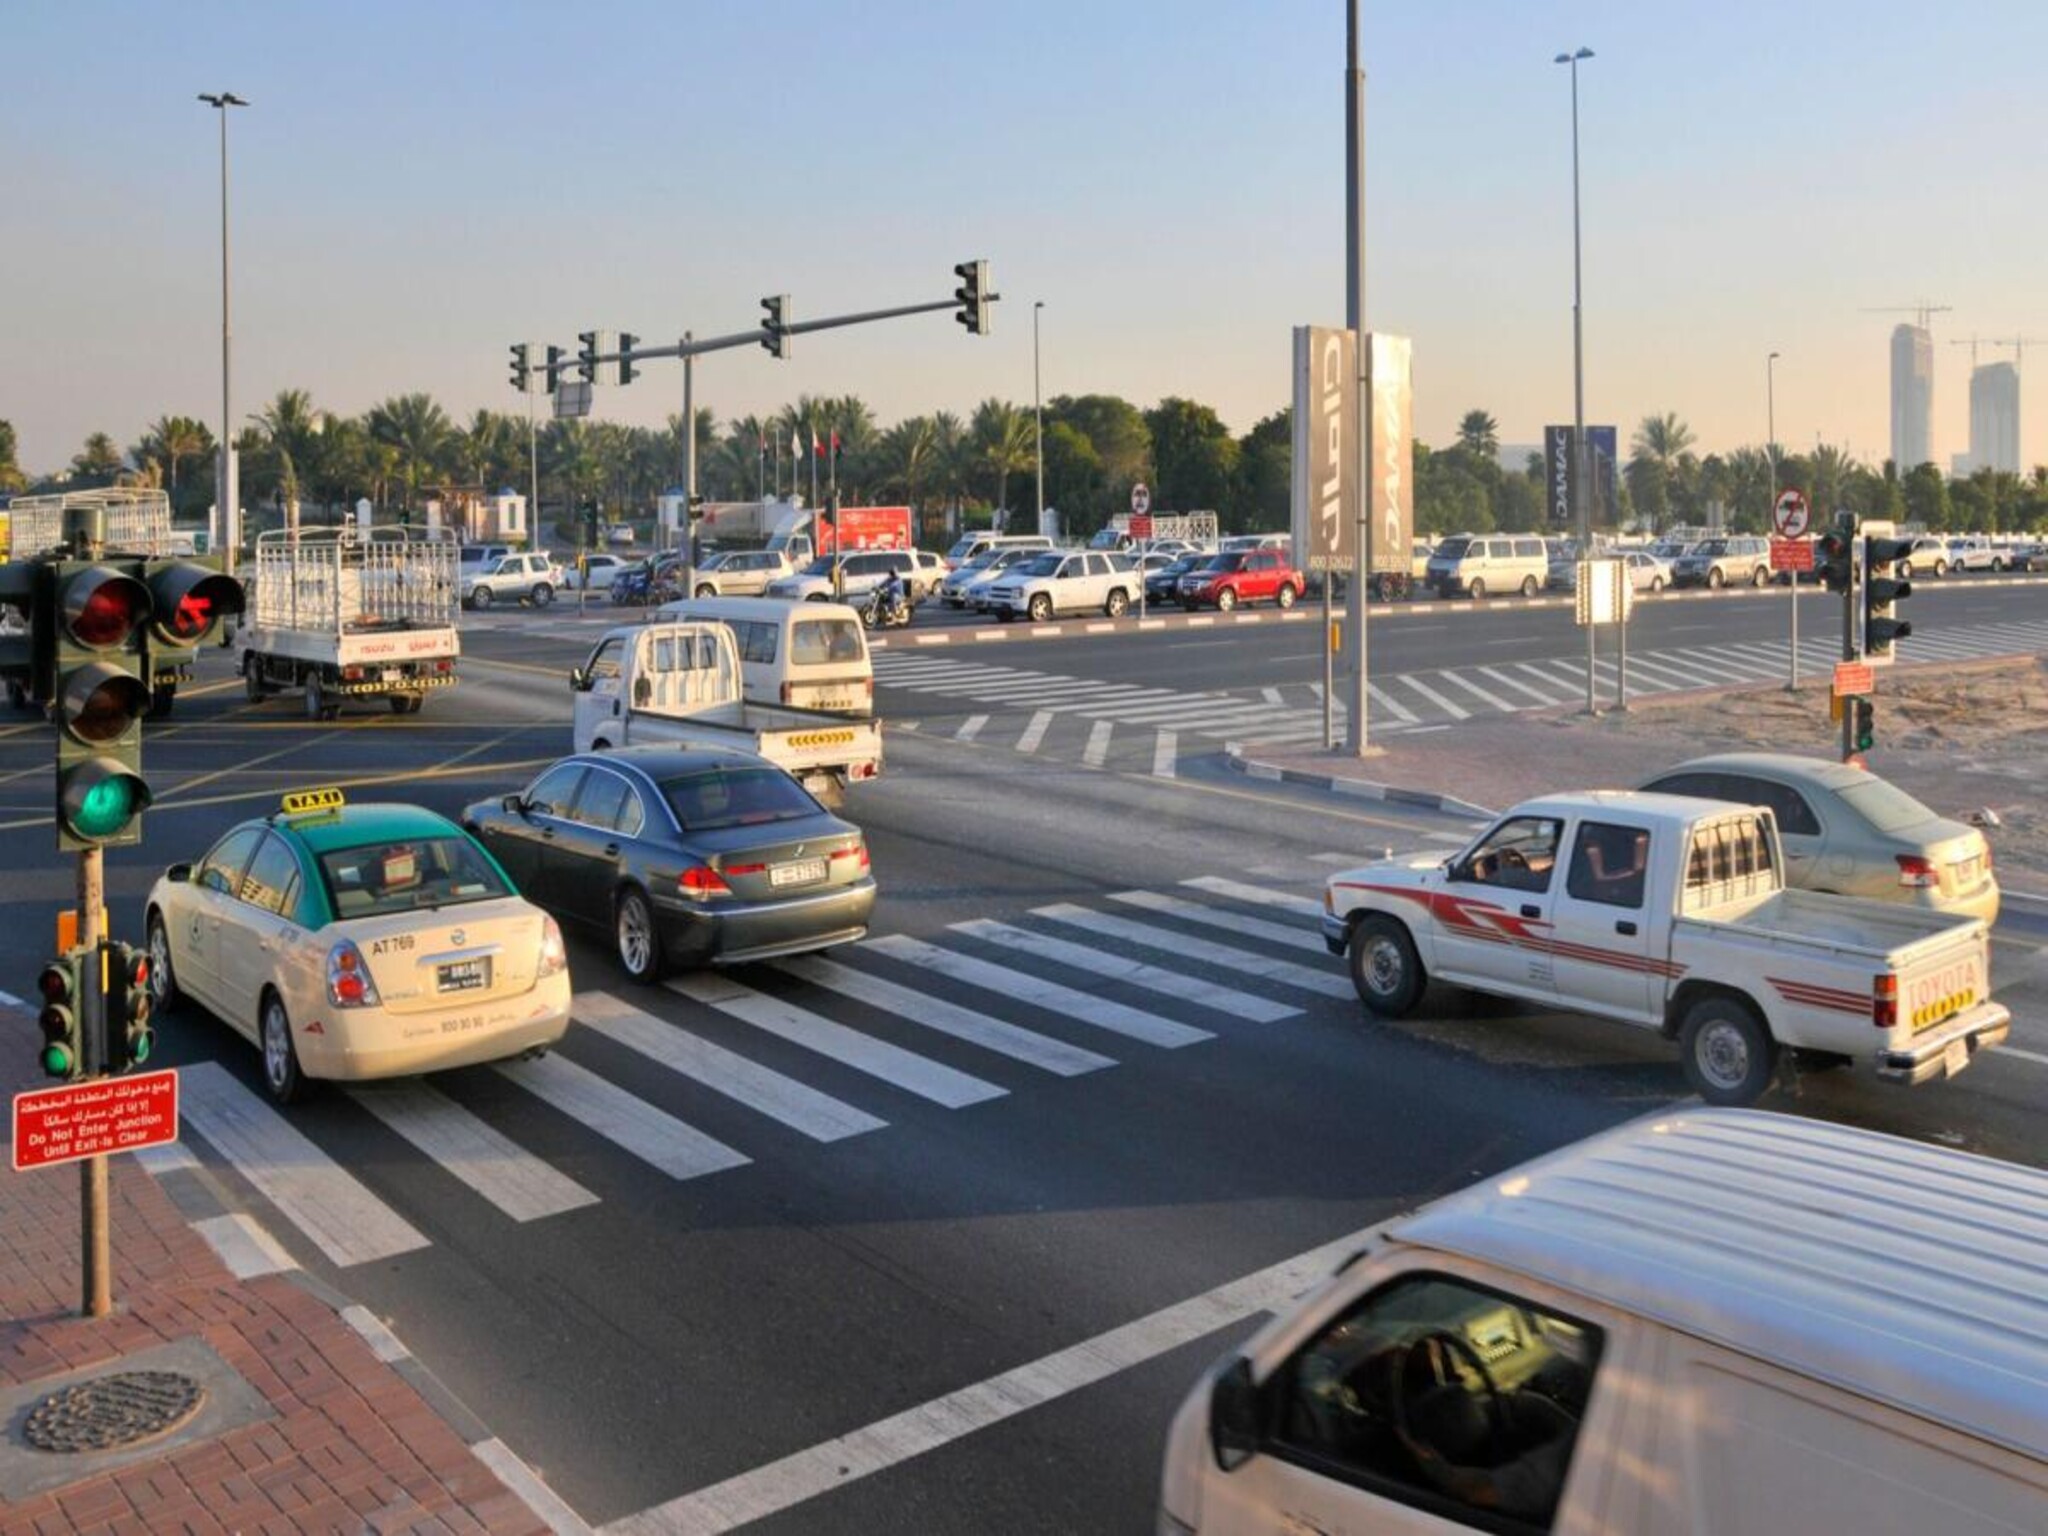 Abu Dhabi issues a traffic alert regarding the ban on some vehicles during Ramadan